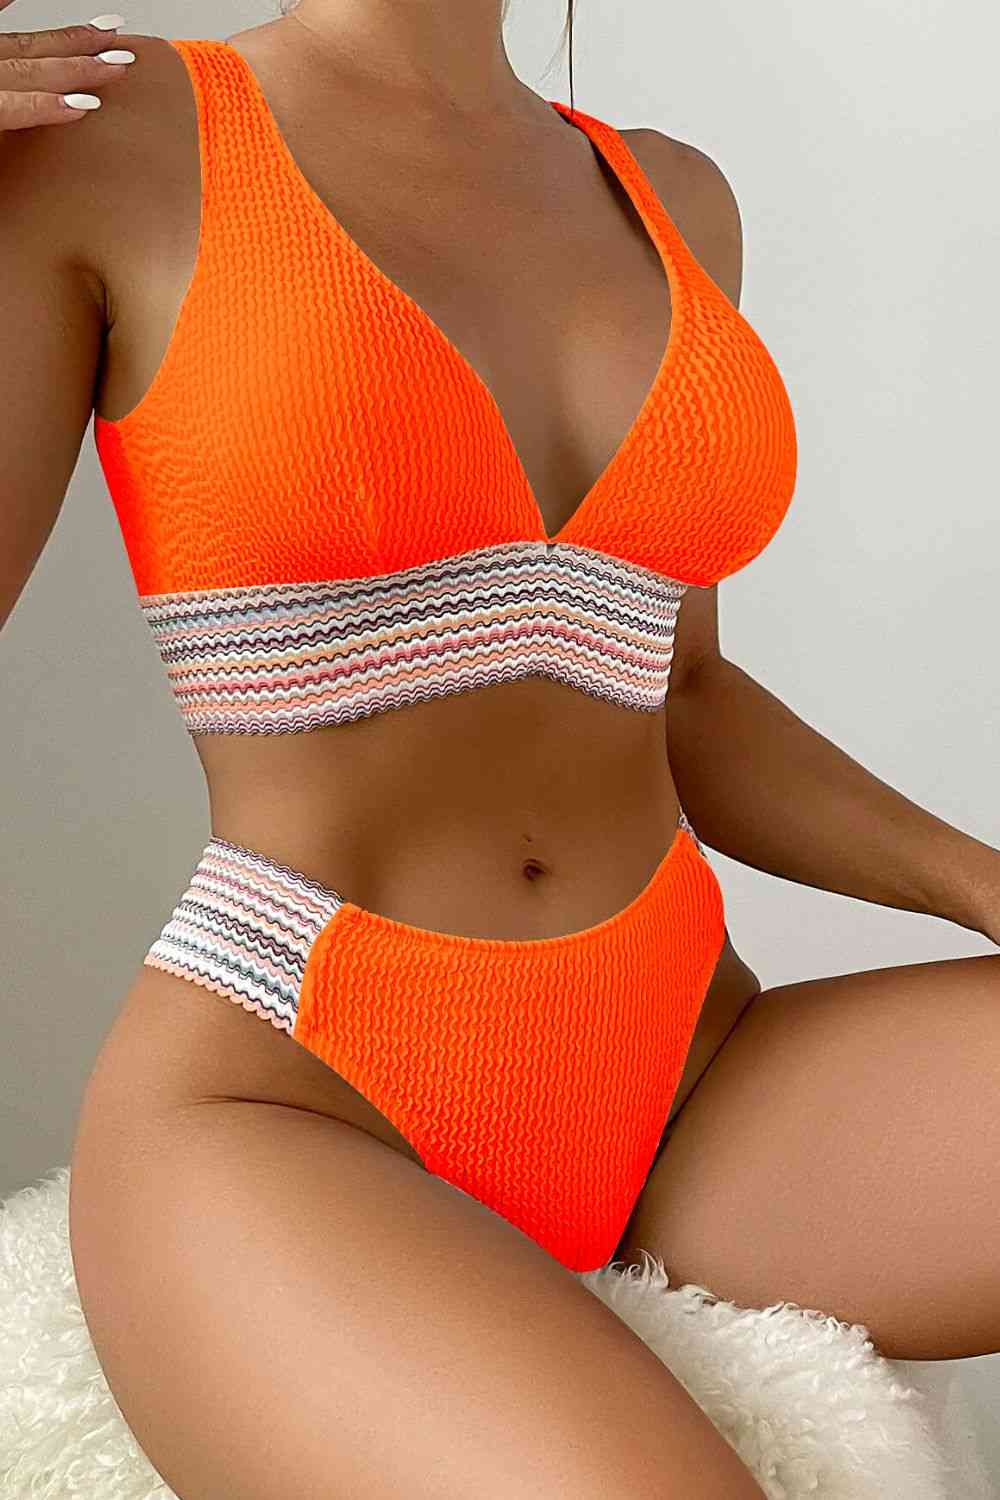 a woman in an orange bikini top and matching panties